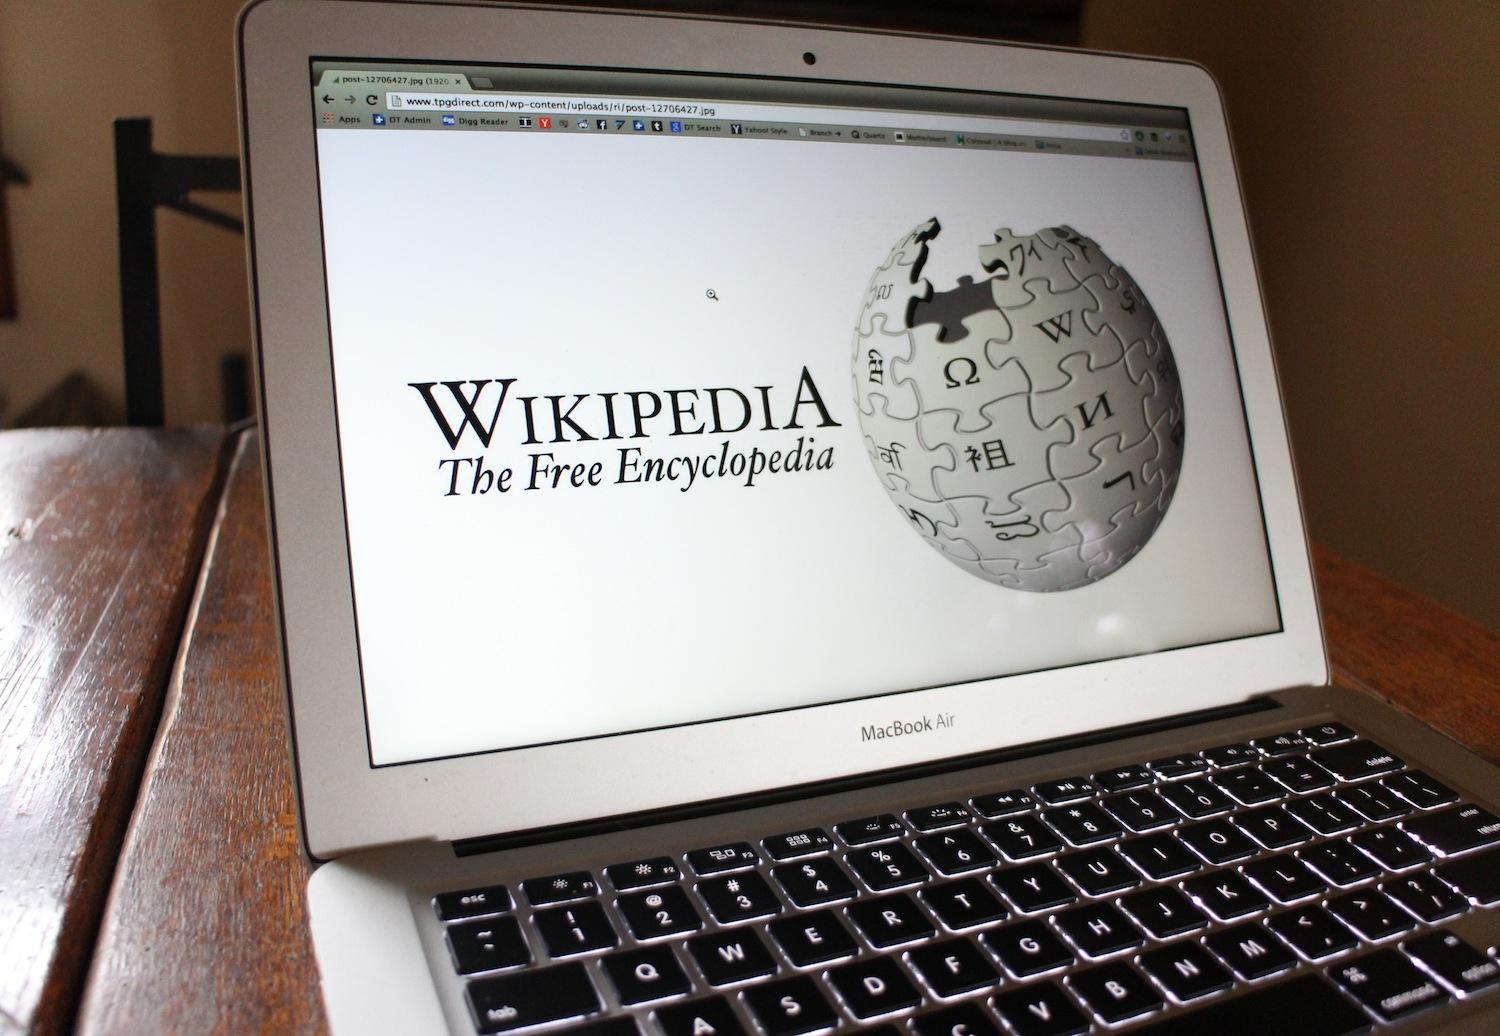 Conheça o curioso jogo de aventura Wikipedia: The Text Adventure